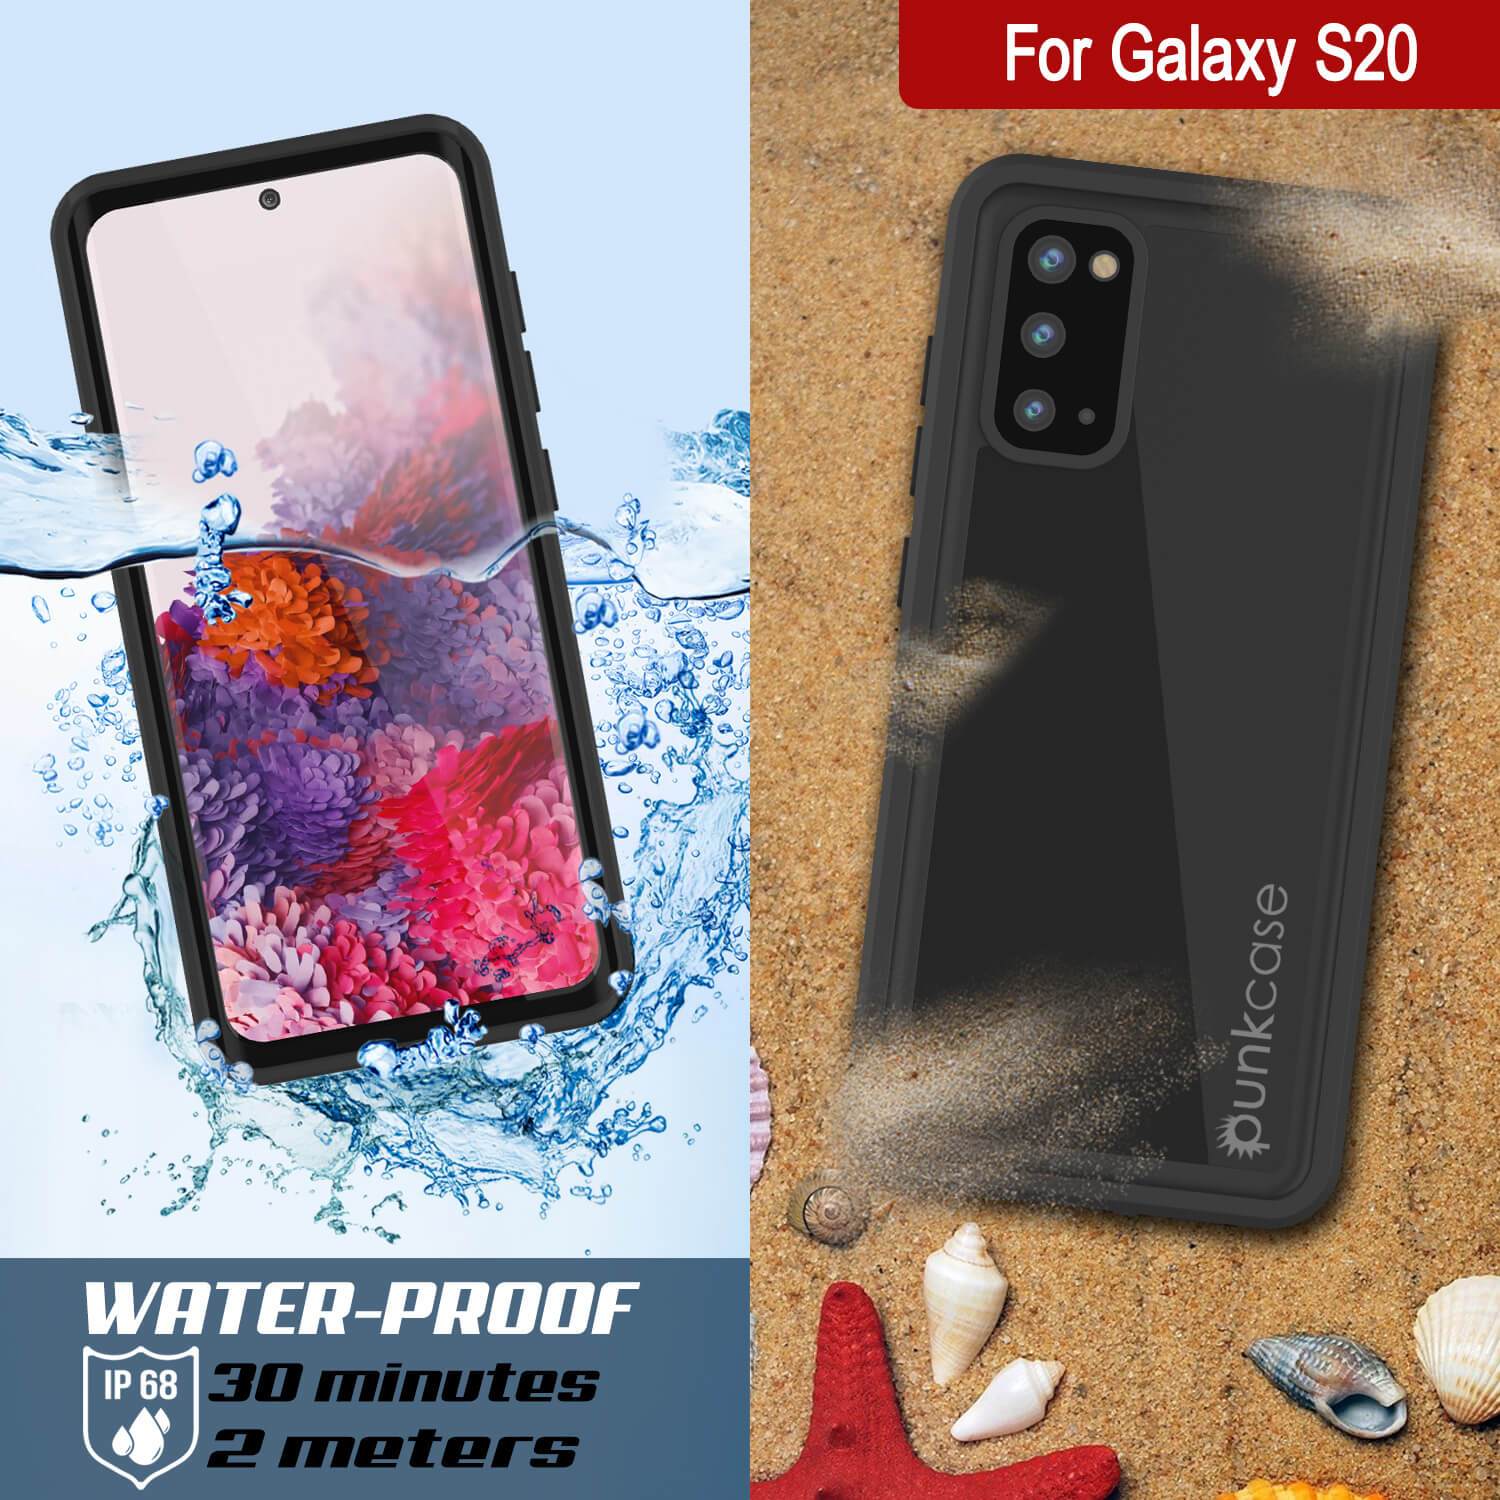 Galaxy S20 Waterproof Case PunkCase StudStar Teal Thin 6.6ft Underwater IP68 Shock/Snow Proof